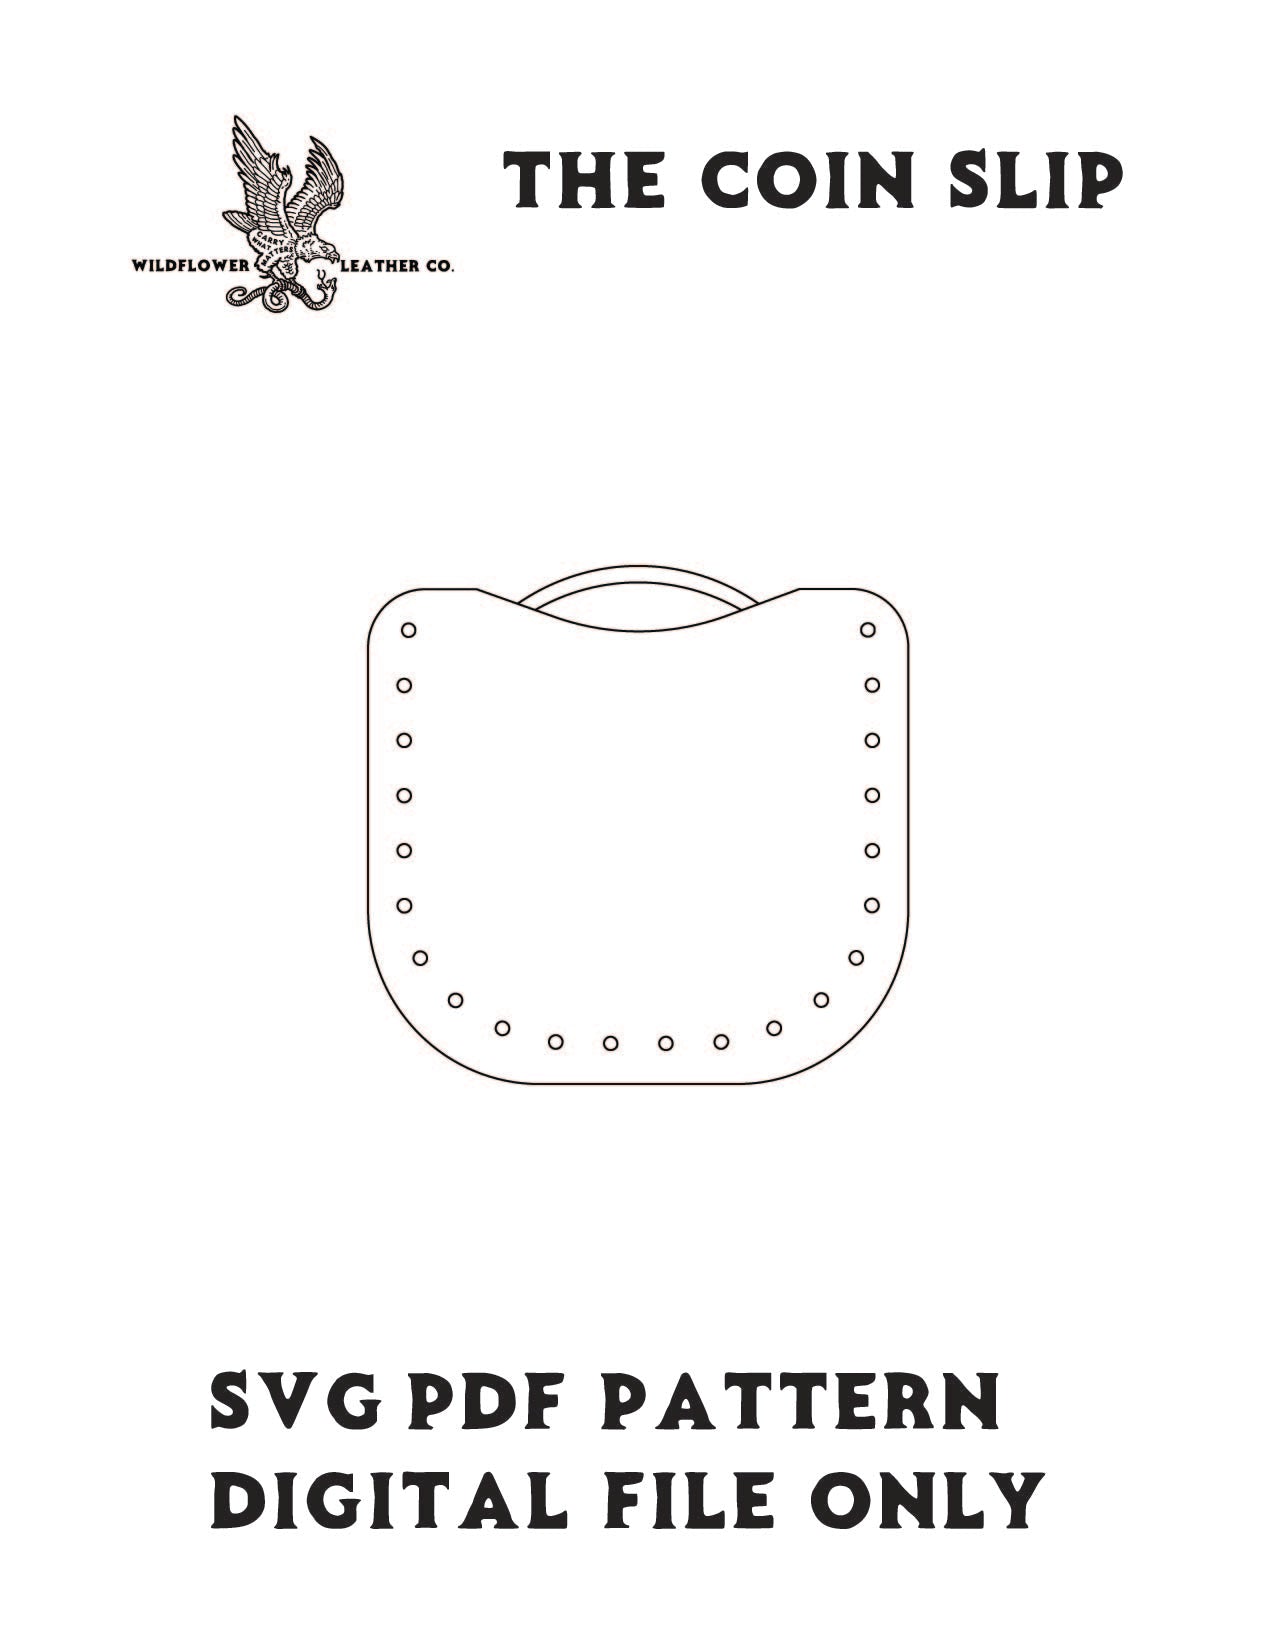 Making The Coin Slip PDF/SVG Pattern